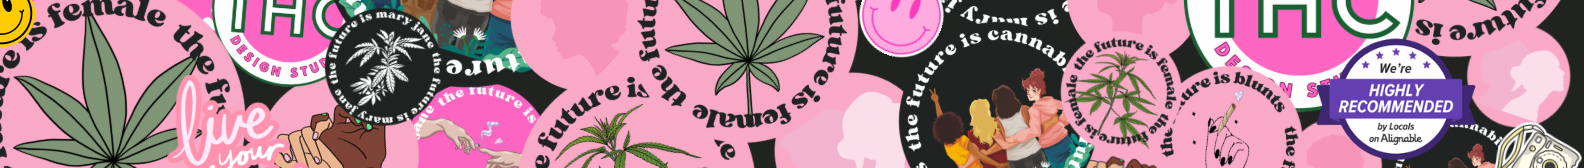 Tara Eveland's profile banner